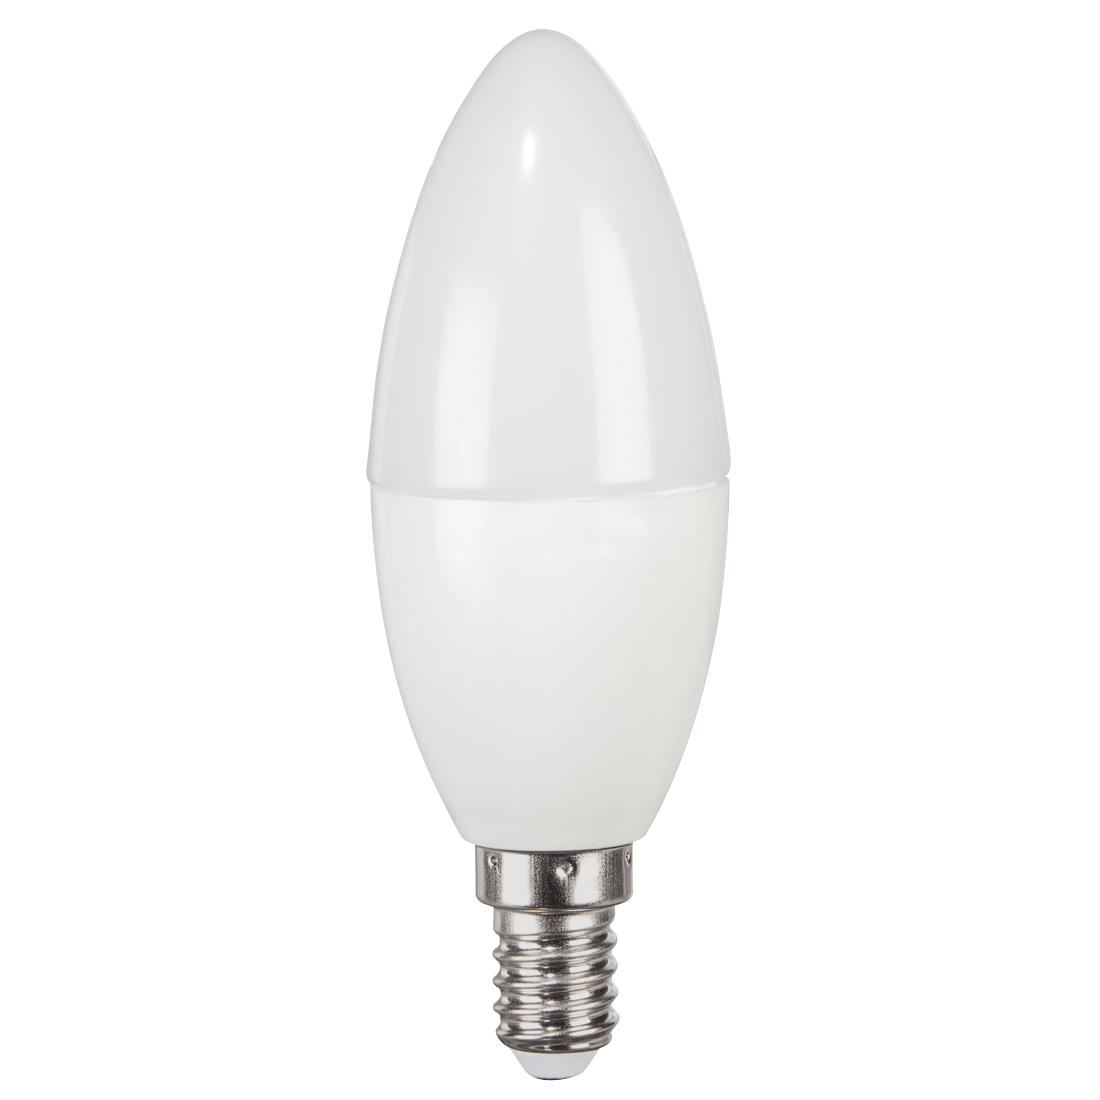 abx Druckfähige Abbildung - Xavax, LED-Lampe, E14, 470lm ersetzt 40W Kerzenlampe, Warmweiß